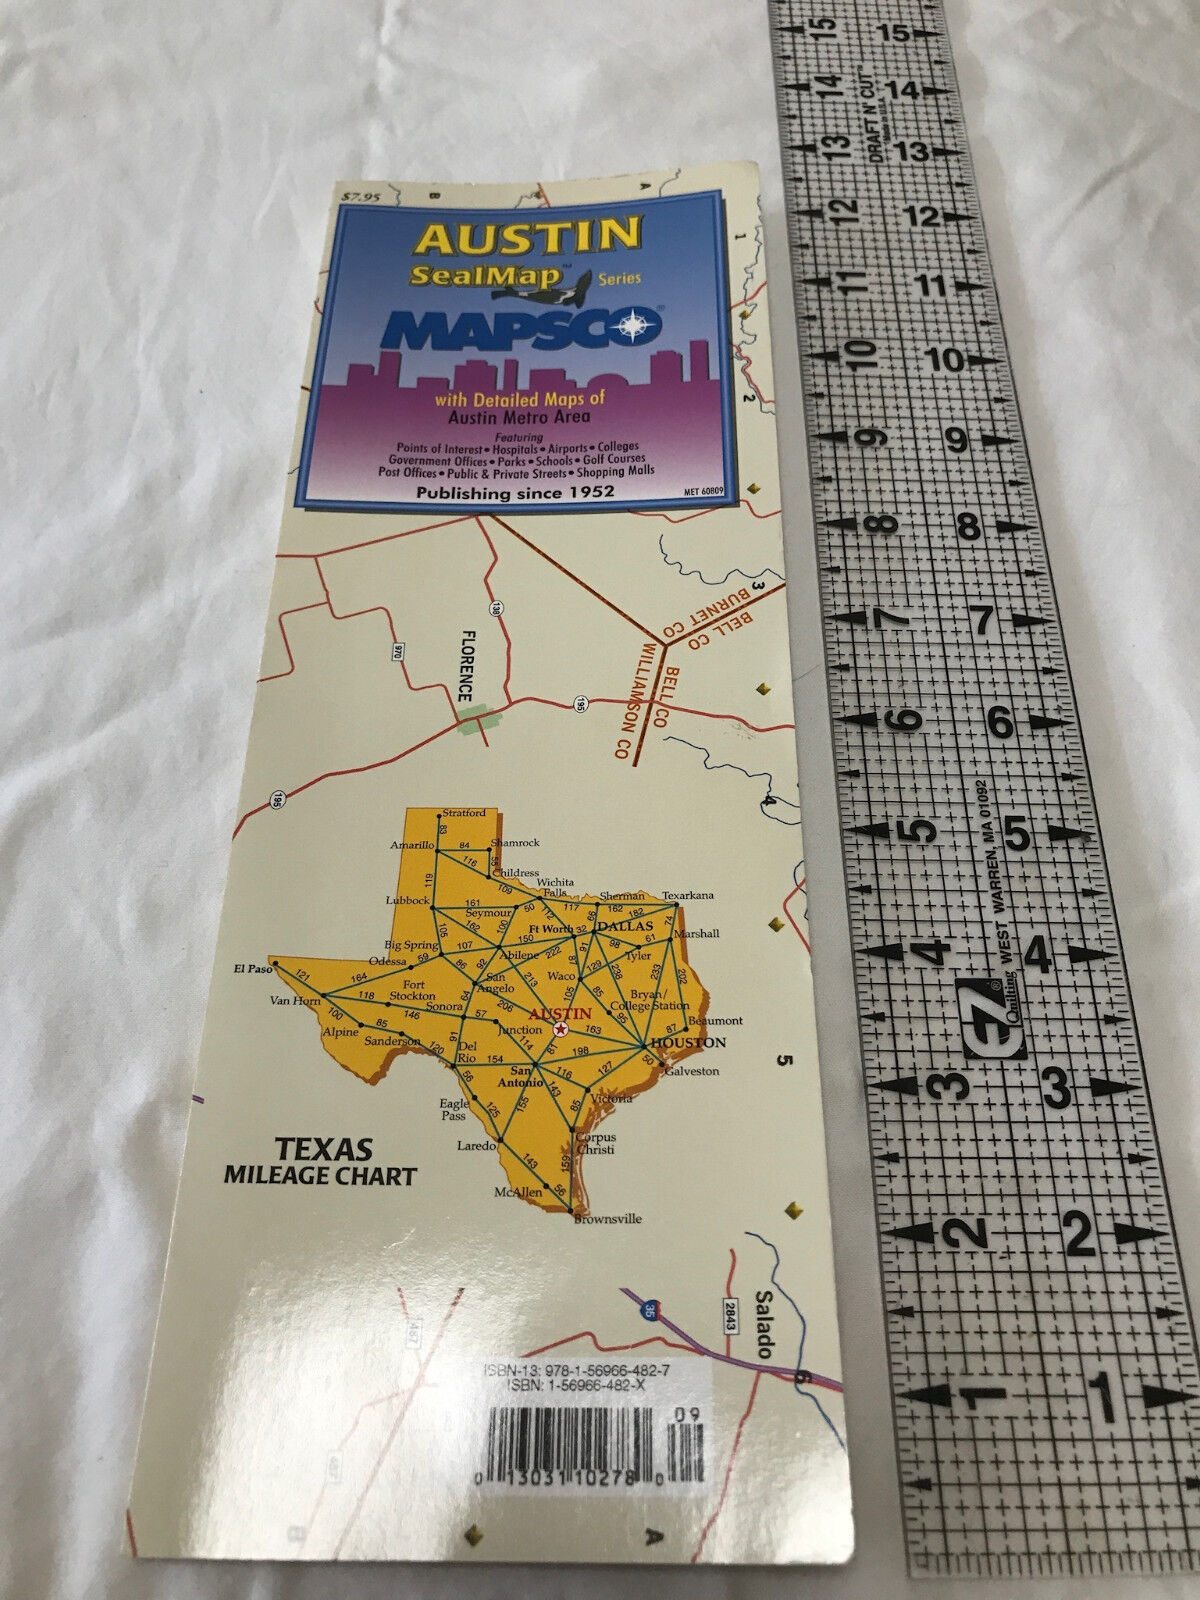 Austin, TX sealmap mapsco 2009 edition